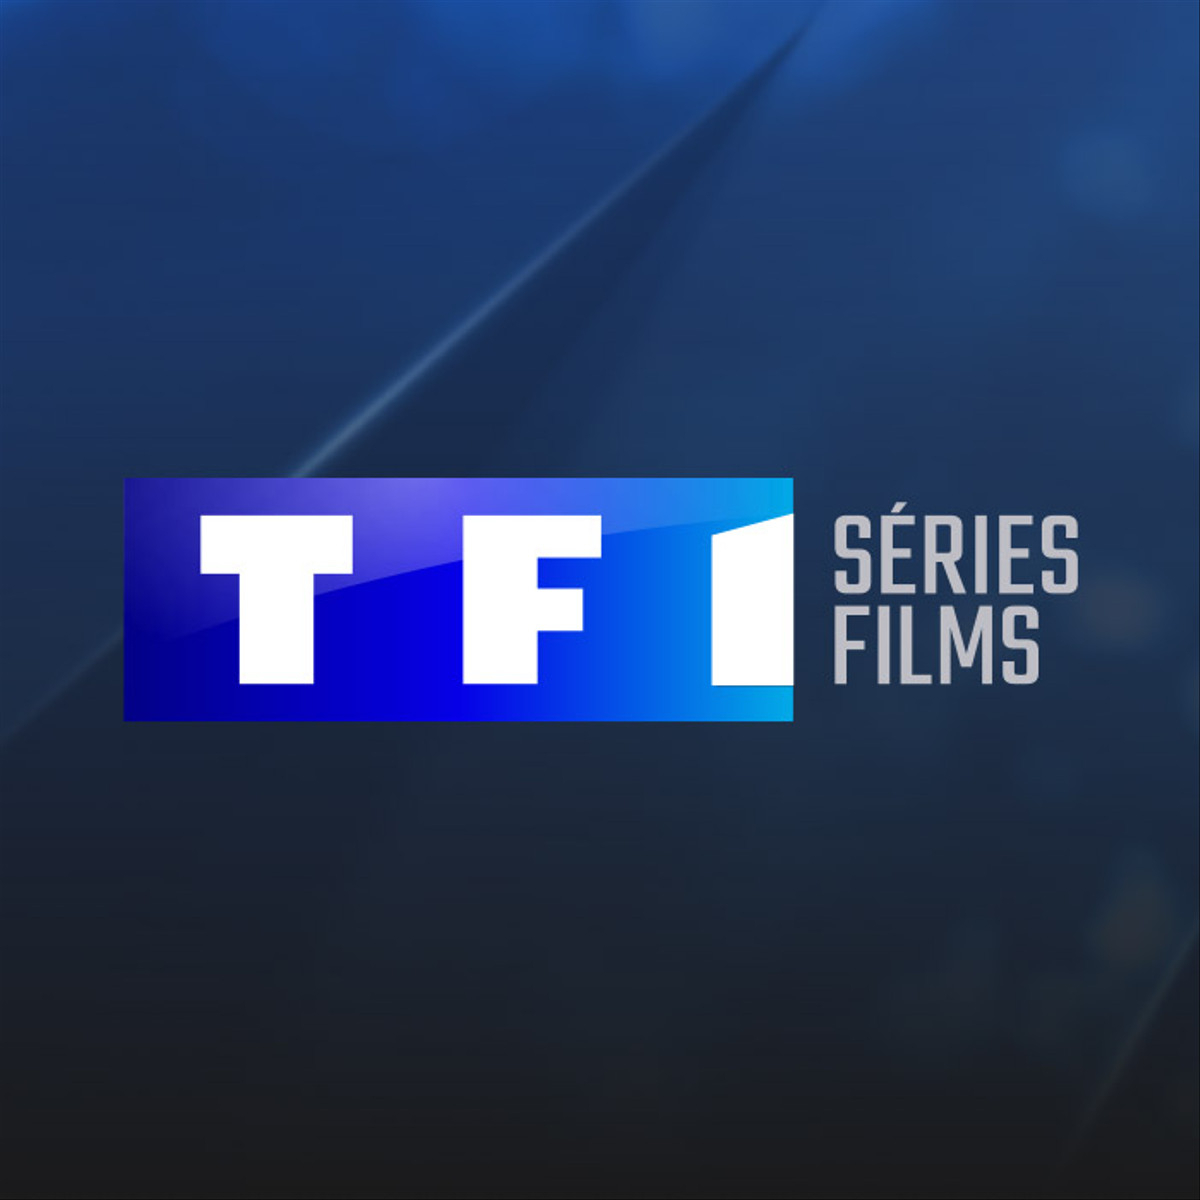 Tf1 Séries Films En Direct Live | Mytf1 concernant Regarder En Direct Tf1 Gratuitement